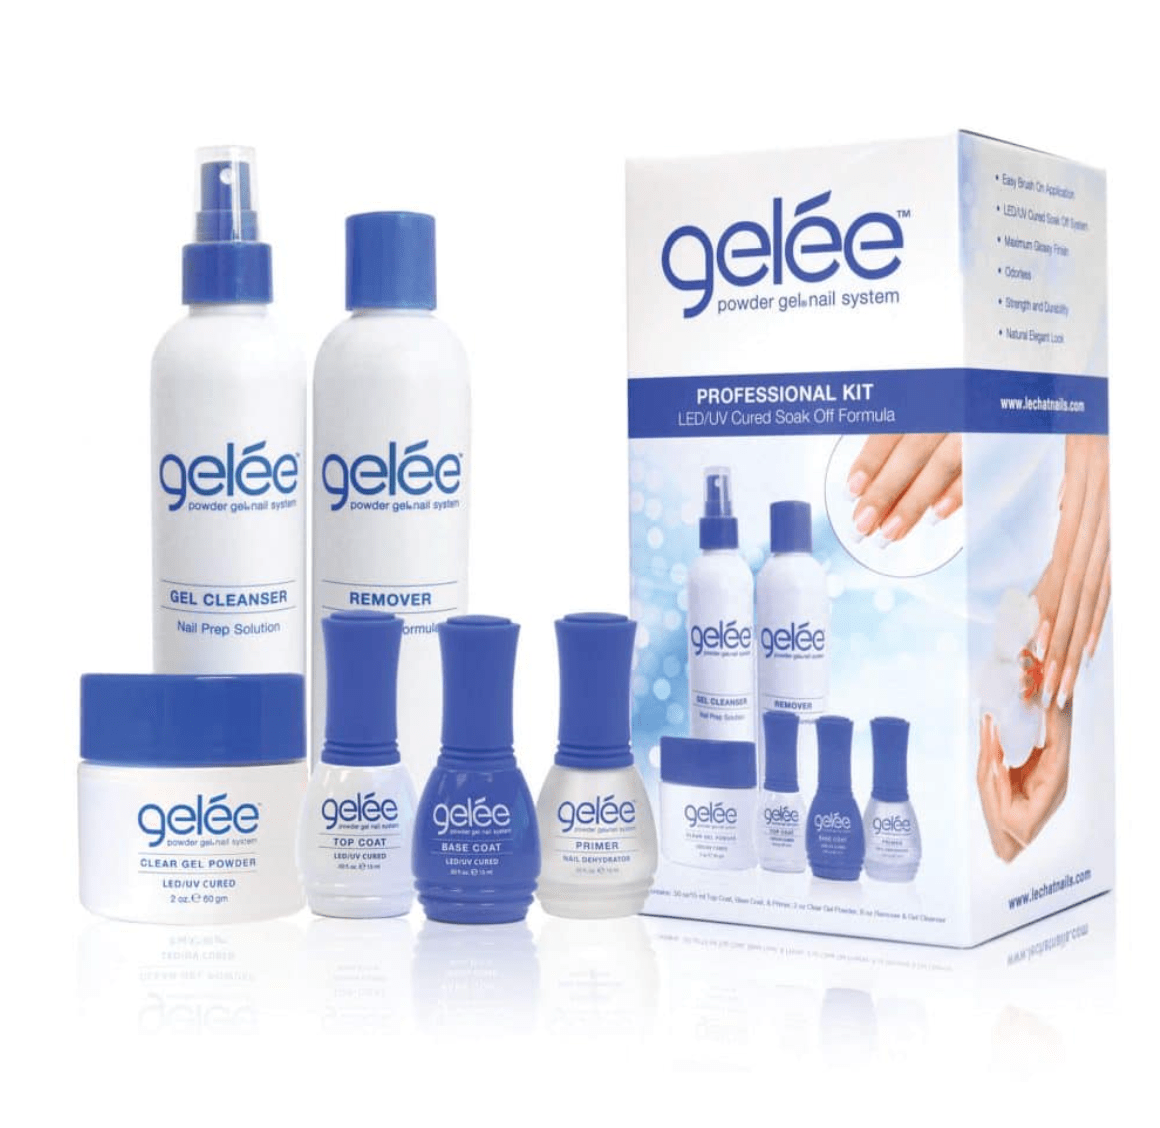 Gelée Powder Gel Nail System Professional Kit